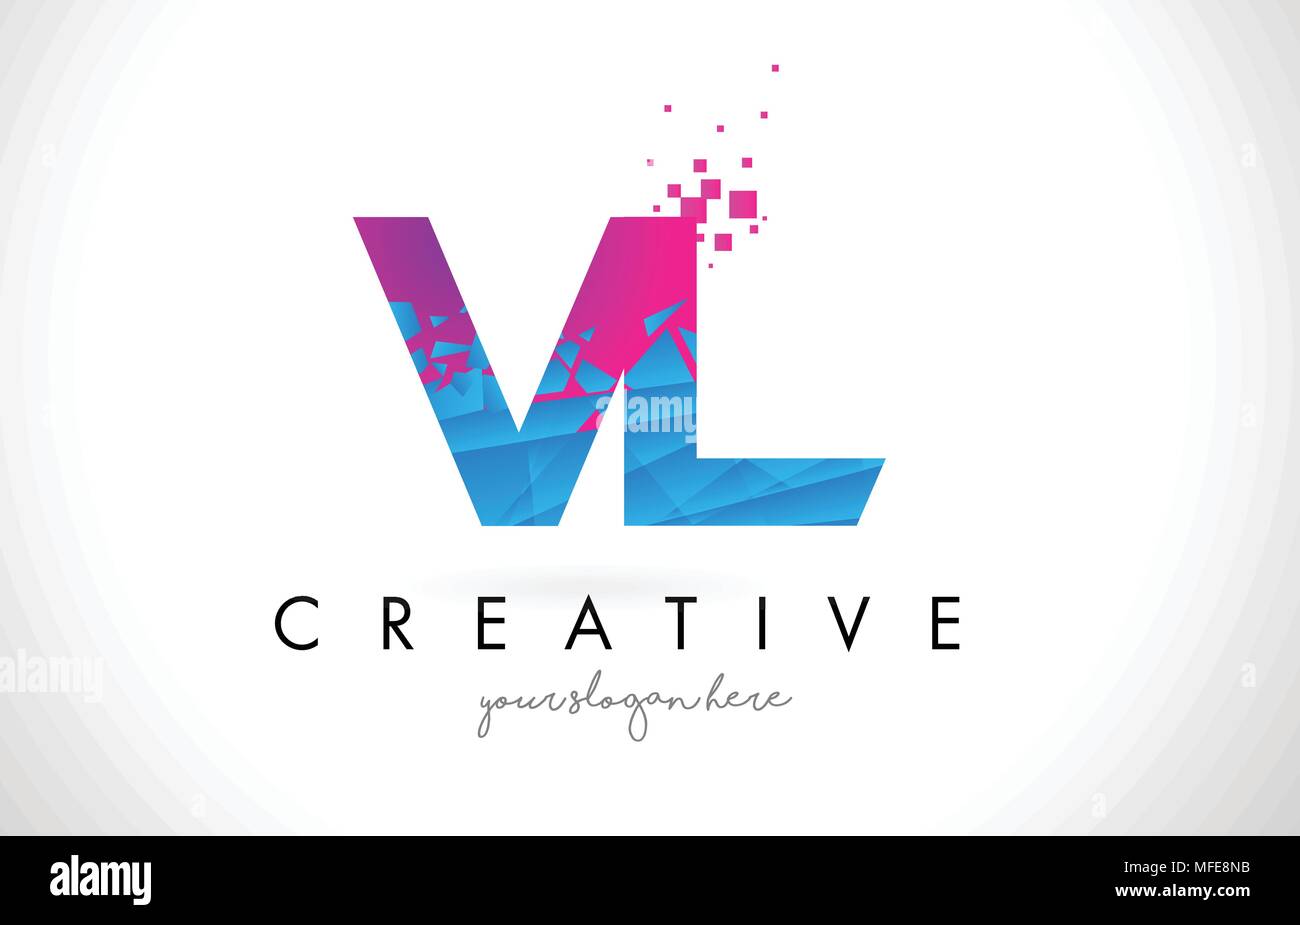 1,344 Vl Logo Design Images, Stock Photos, 3D objects, & Vectors